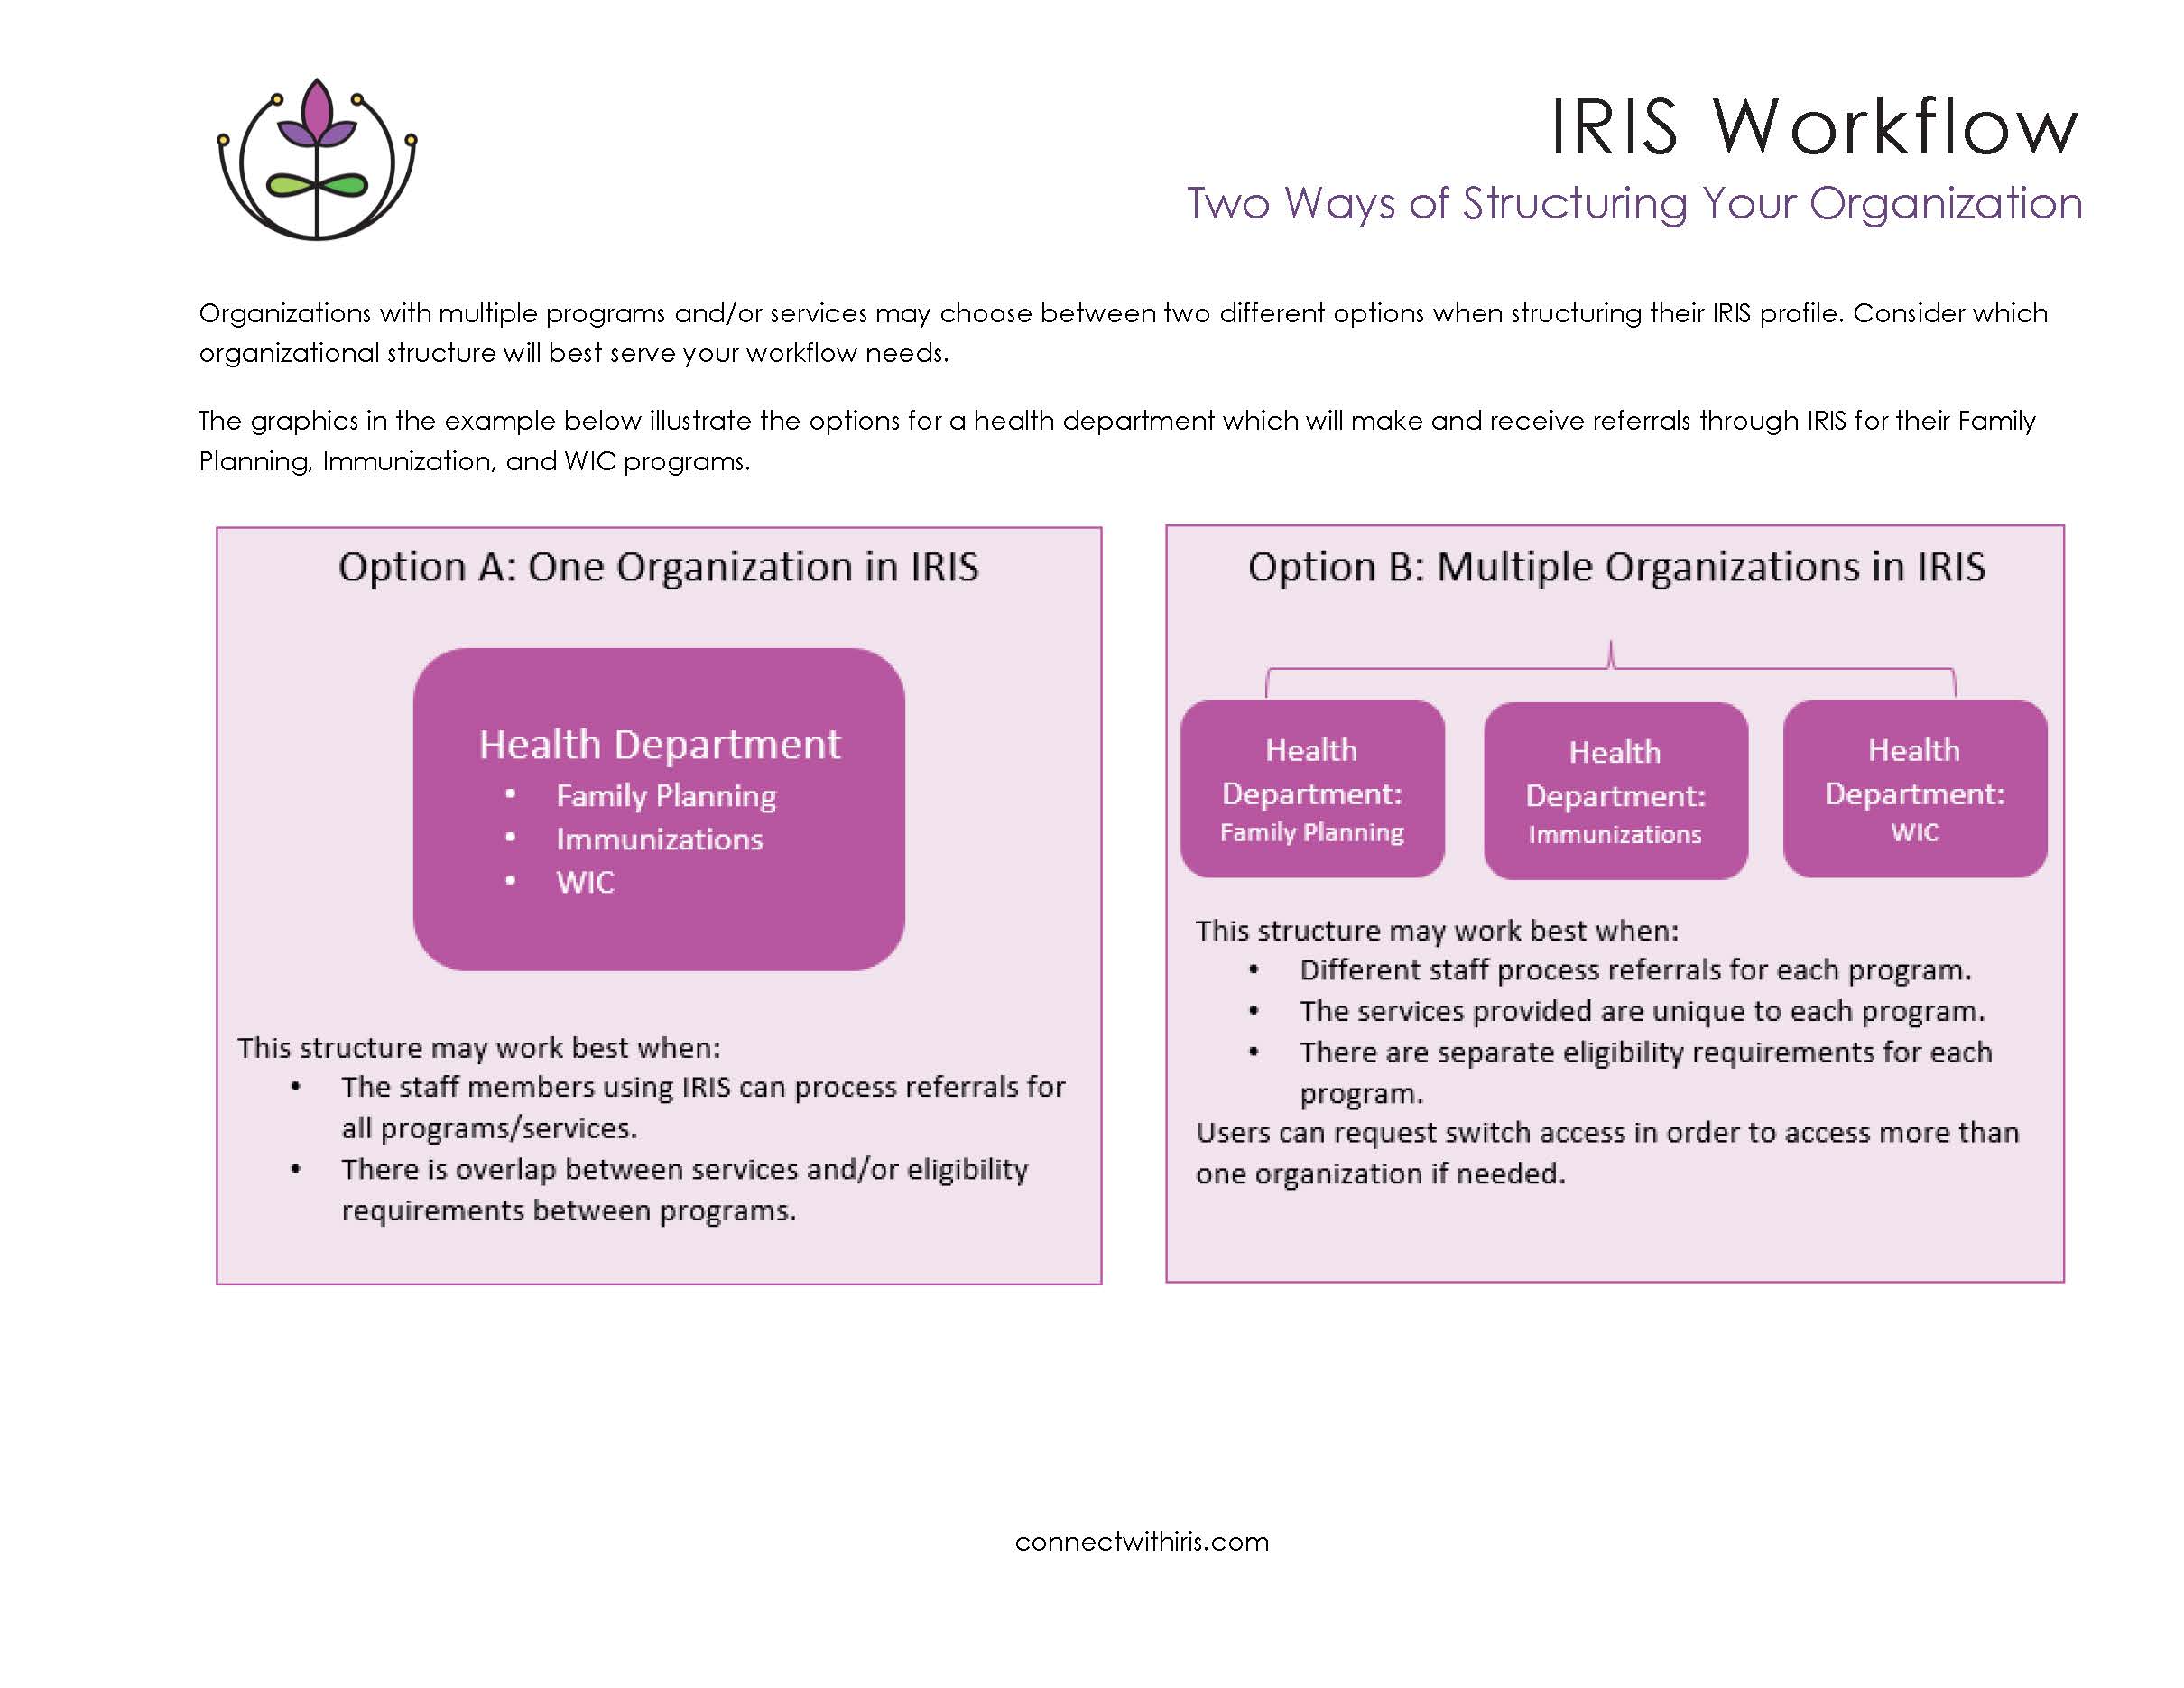 IRIS Workflow: Two Ways of Structuring Your IRIS Organization